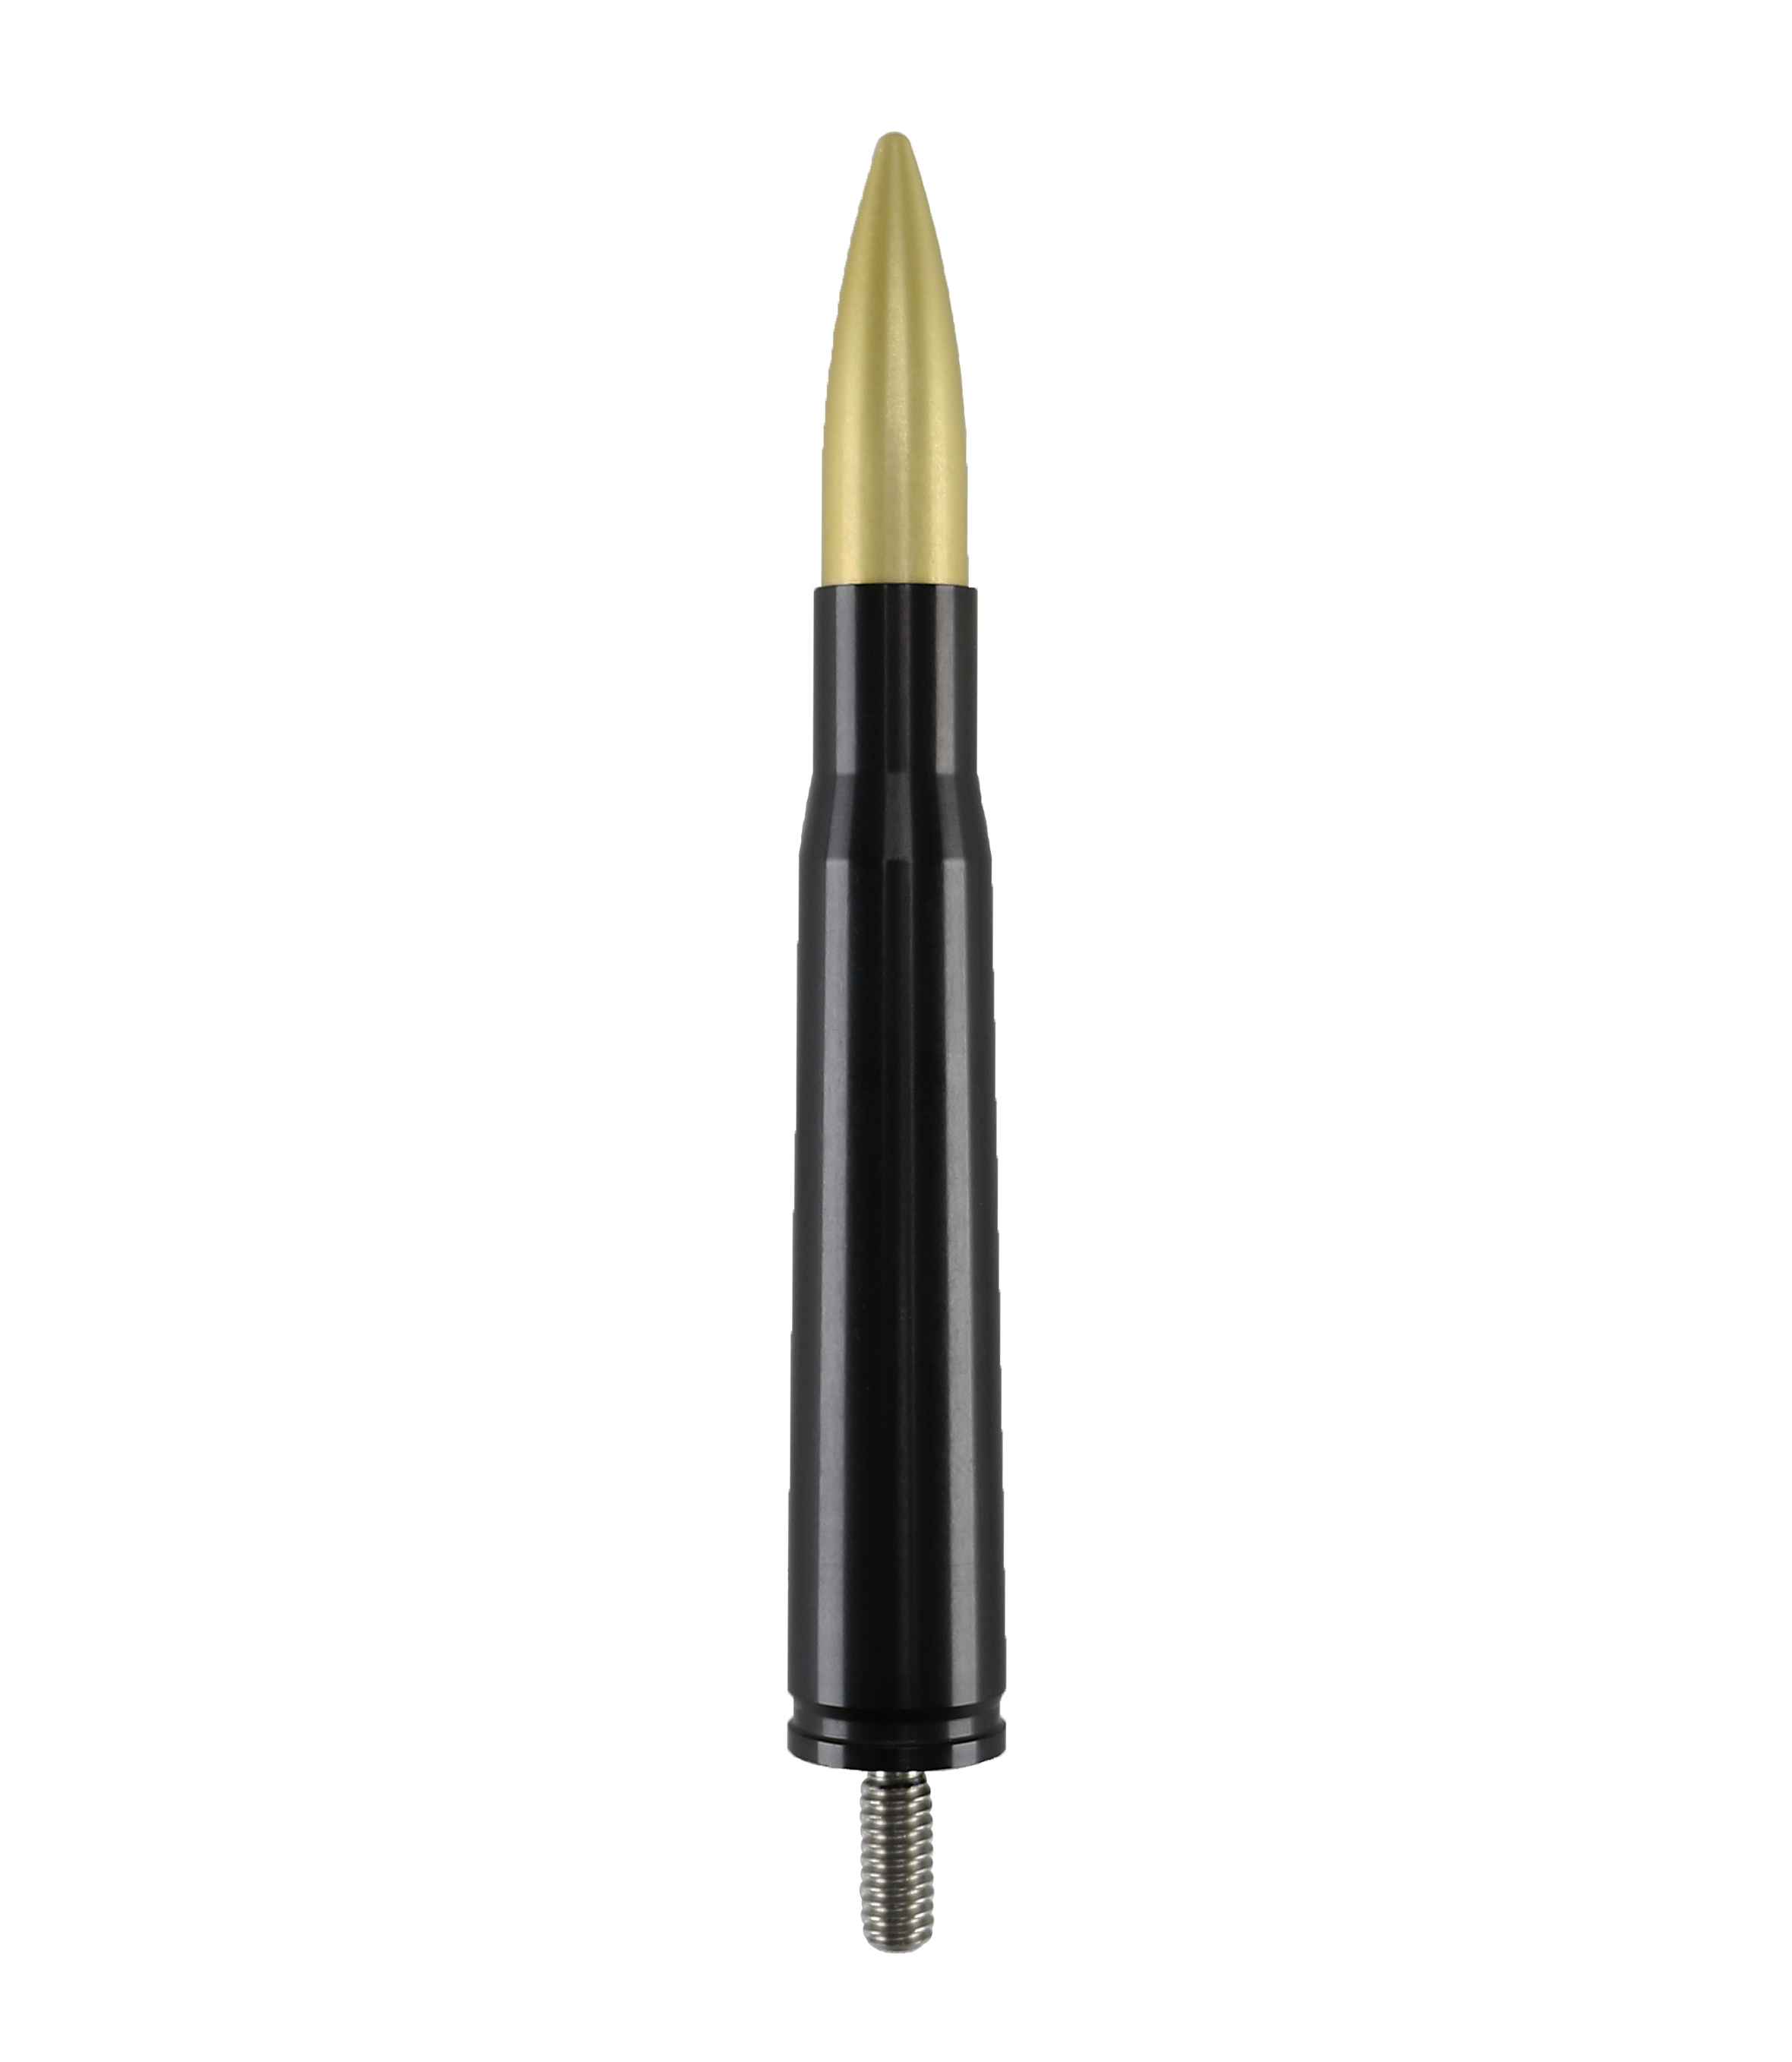 Votex - Made in USA - GOLD 50 Caliber Bullet Aluminum Antenna - Part Number A435-GOLD-HHU